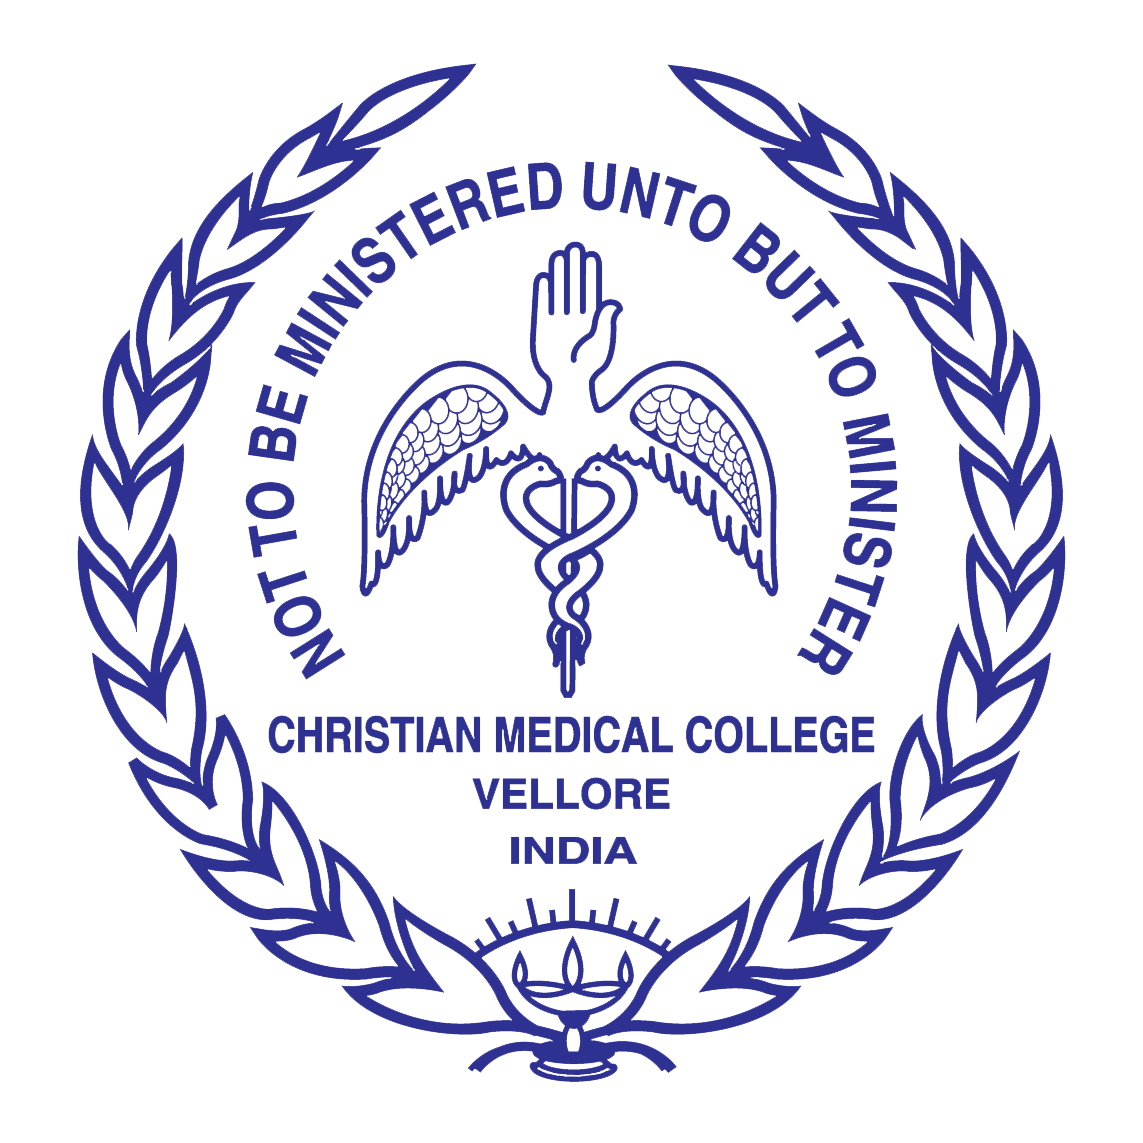 Christian Medical College Vellore Association